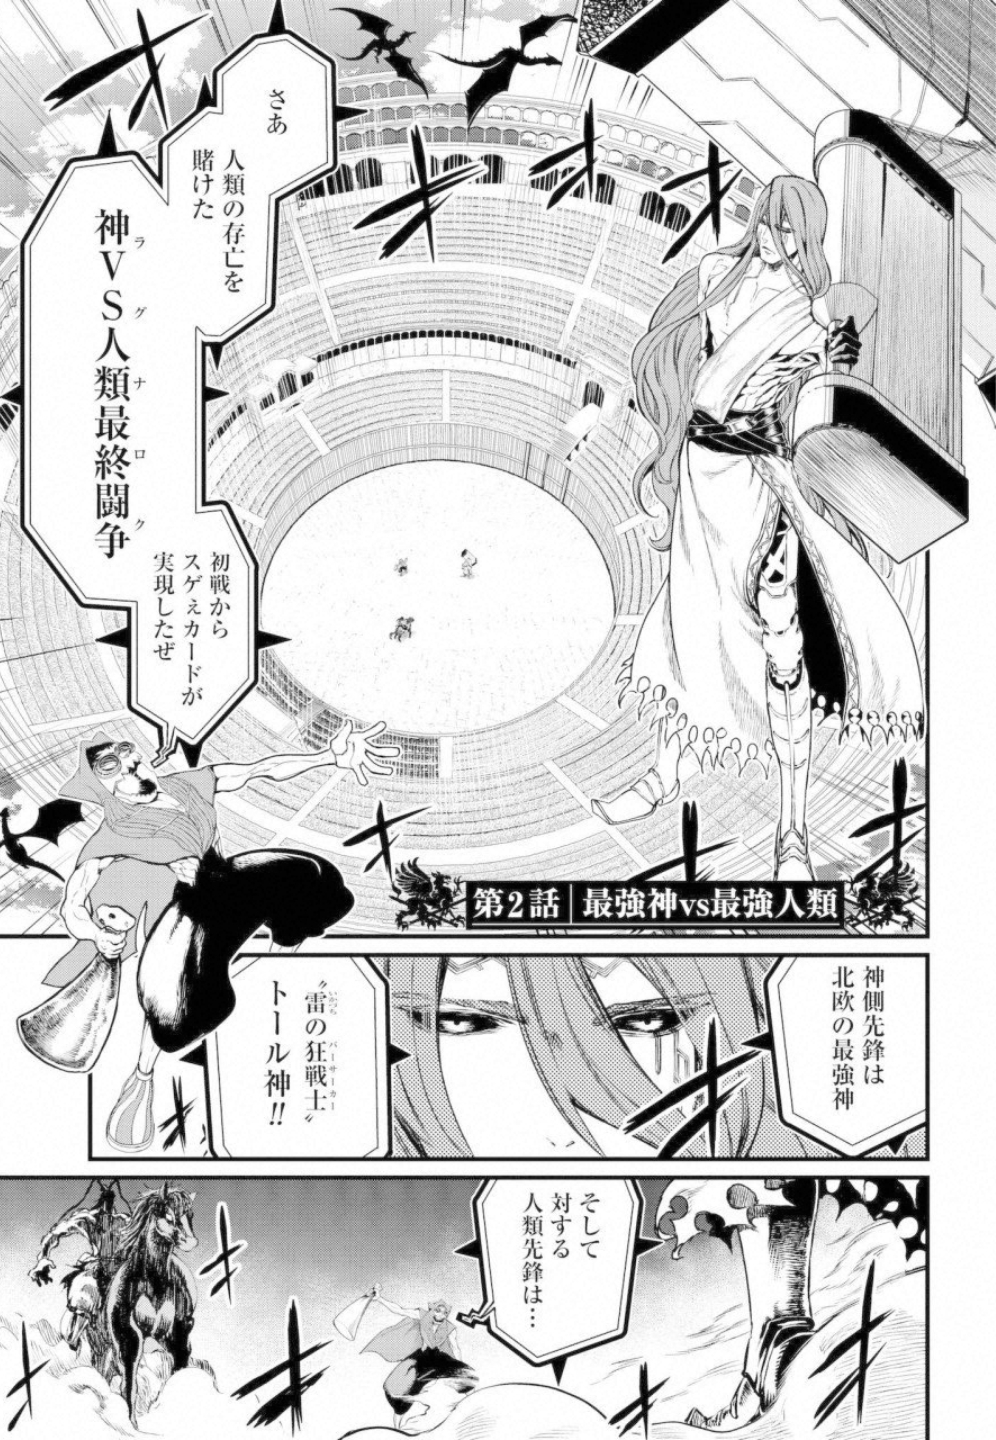 Shuumatsu no Valkyrie/Record of Ragnarok anime., Page 2